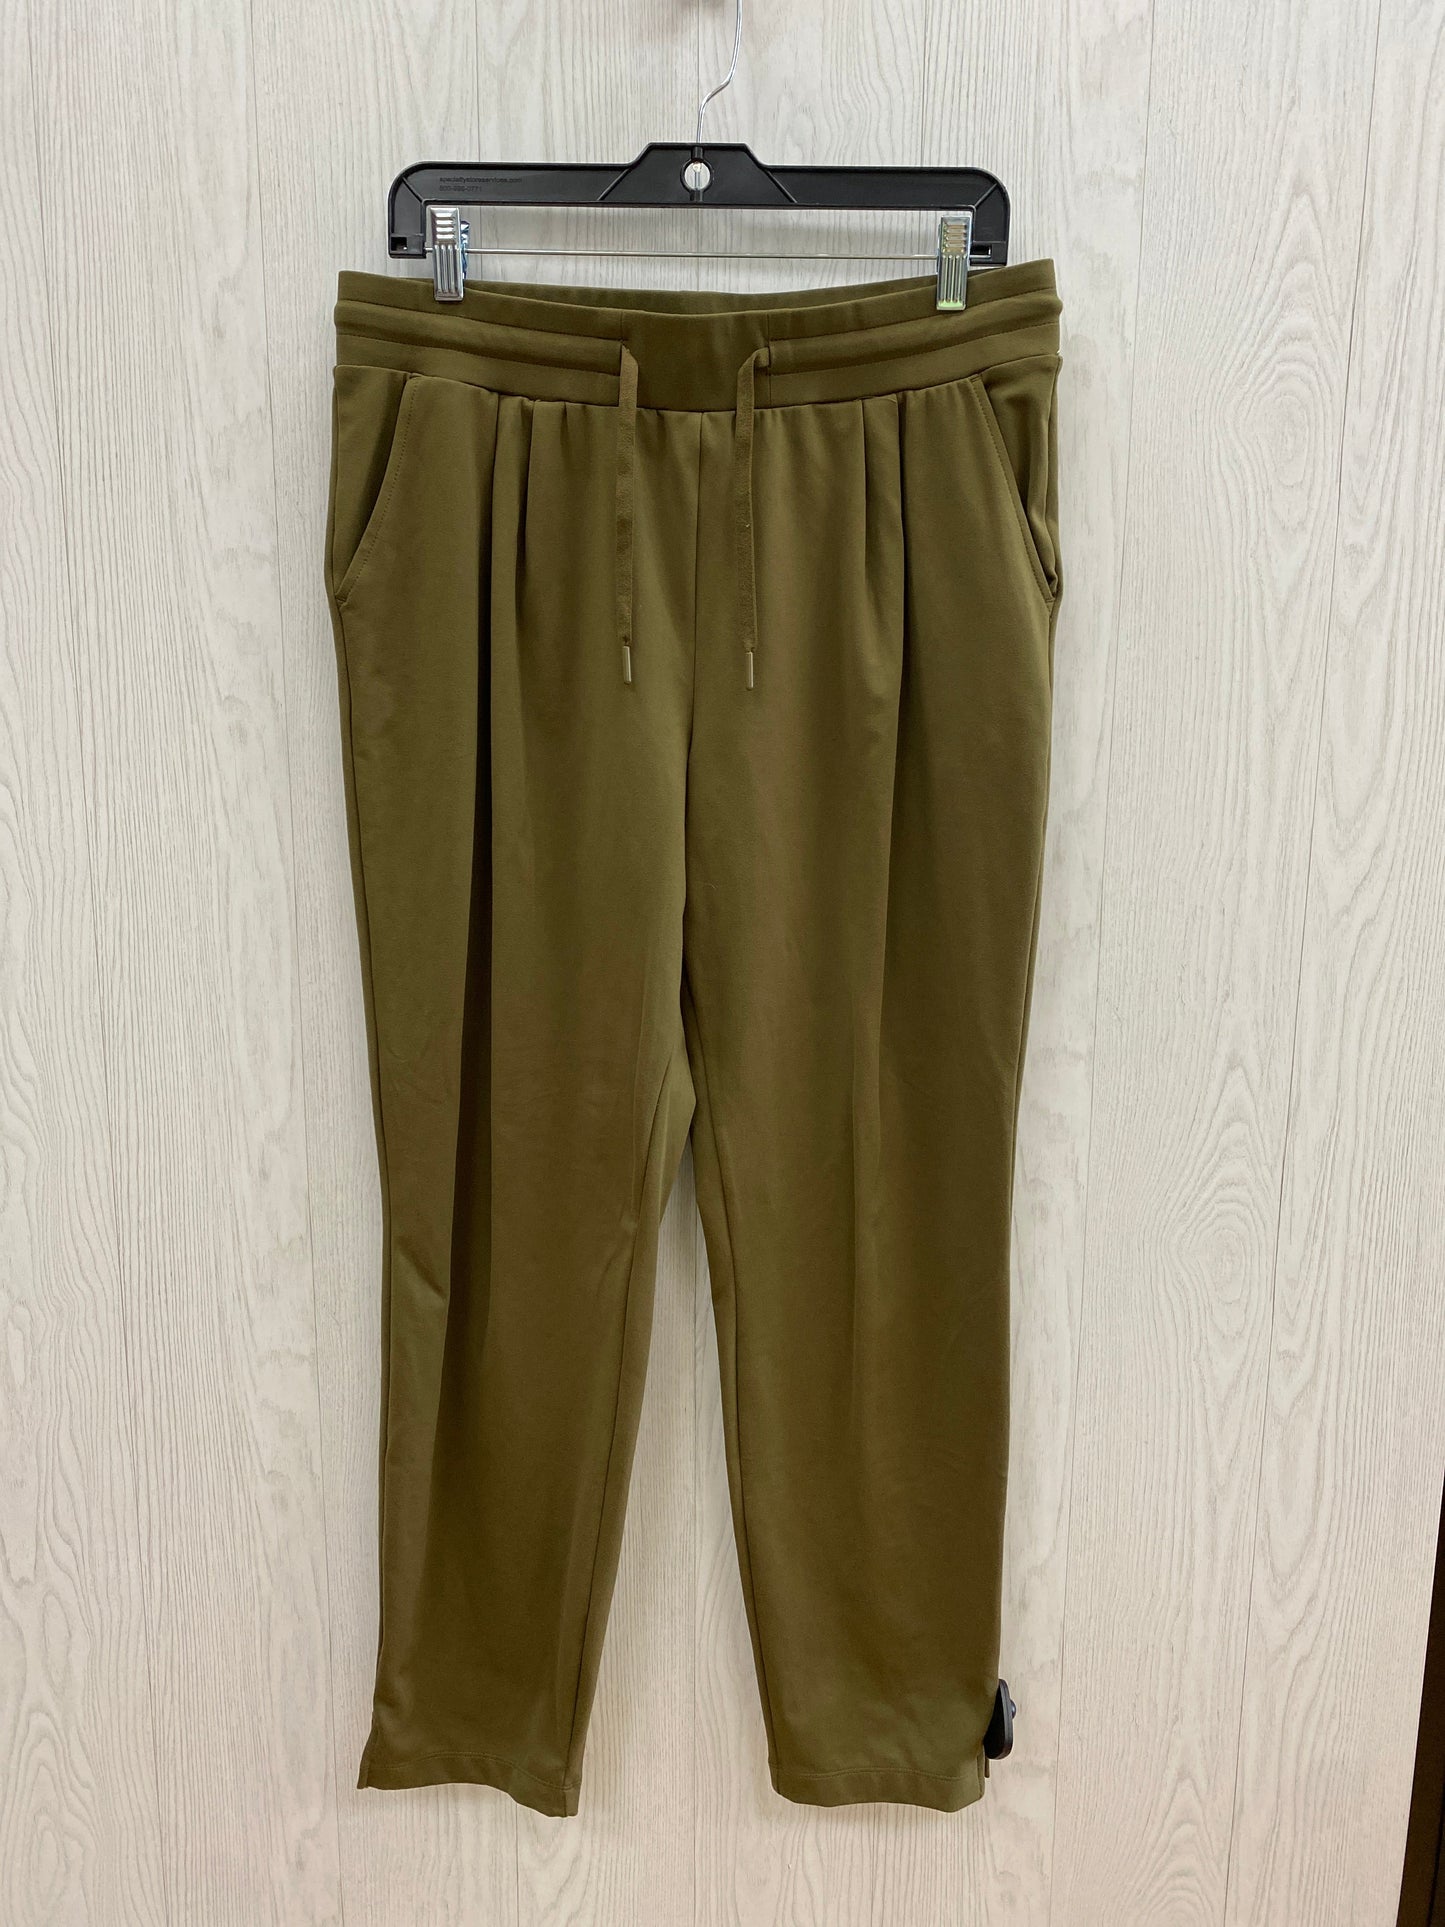 Green Athletic Pants Mondetta, Size L